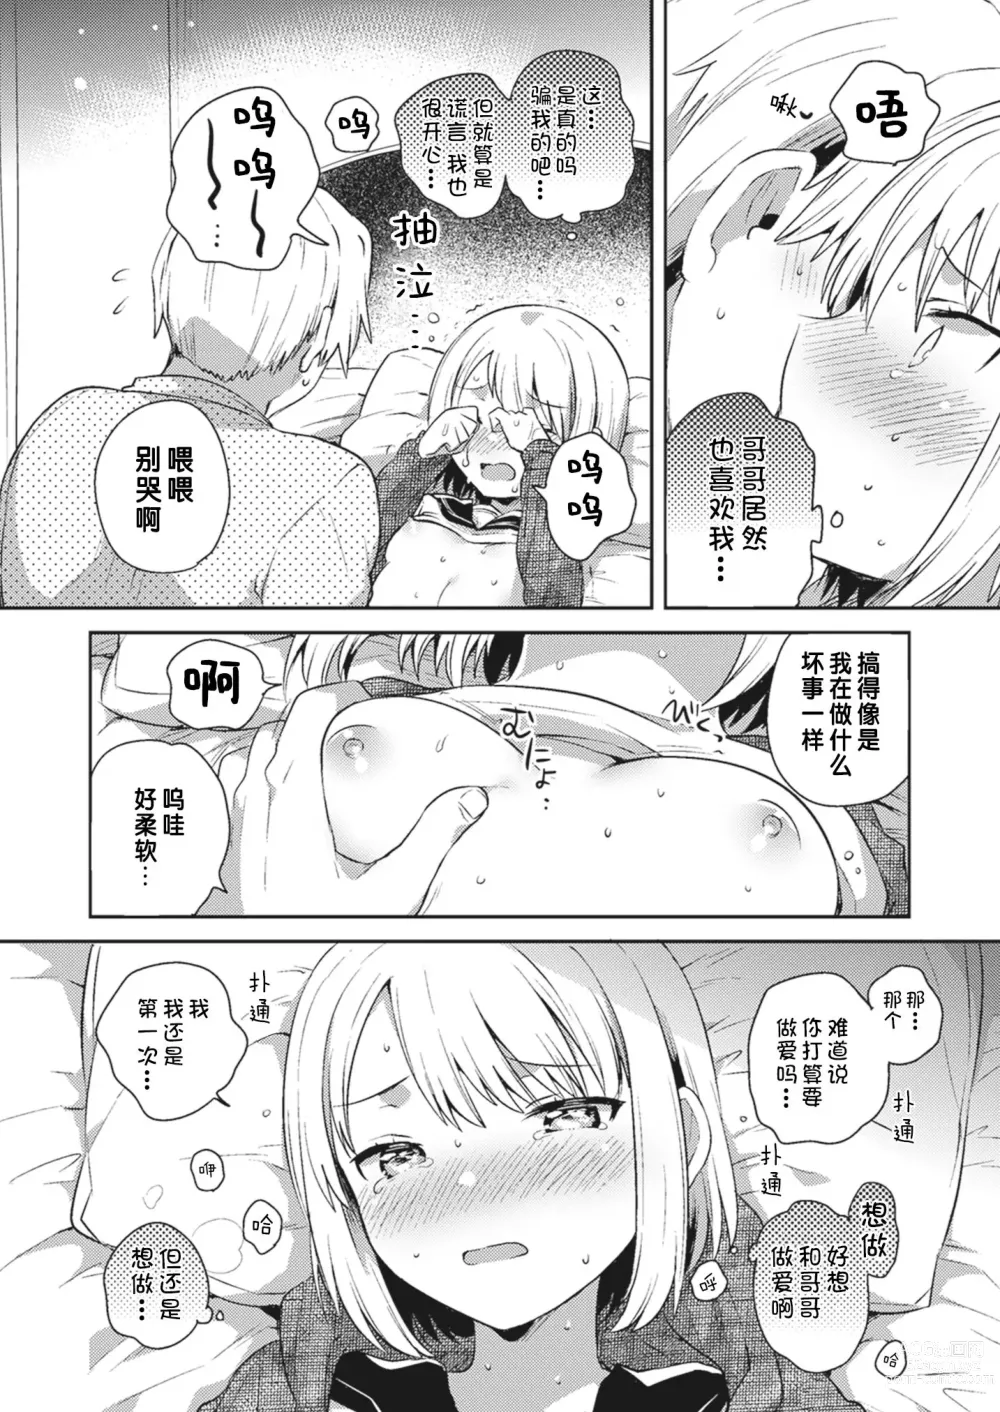 Page 6 of doujinshi 能听见妹妹的心声